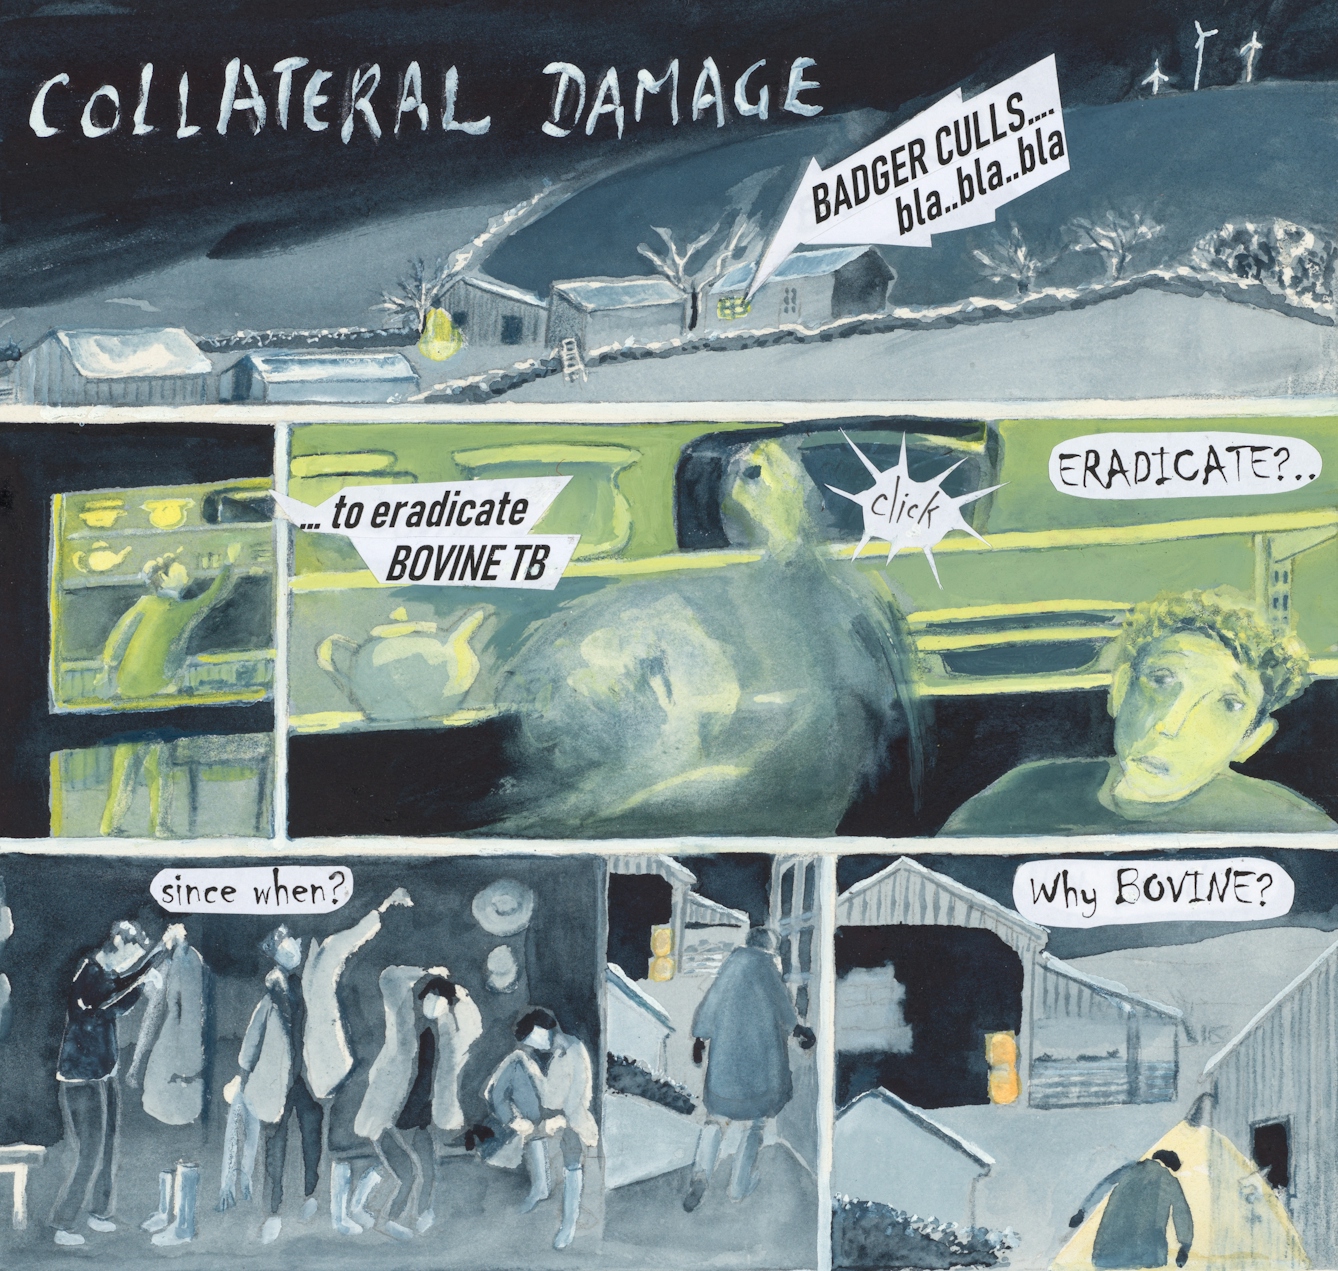 Watercolour comic set in a farm. Text reads: 'Badger culls..bla..bla..bla' '...to eradicate Bovine TB' 'Eradicate?..' 'since when?' 'Why Bovine?'